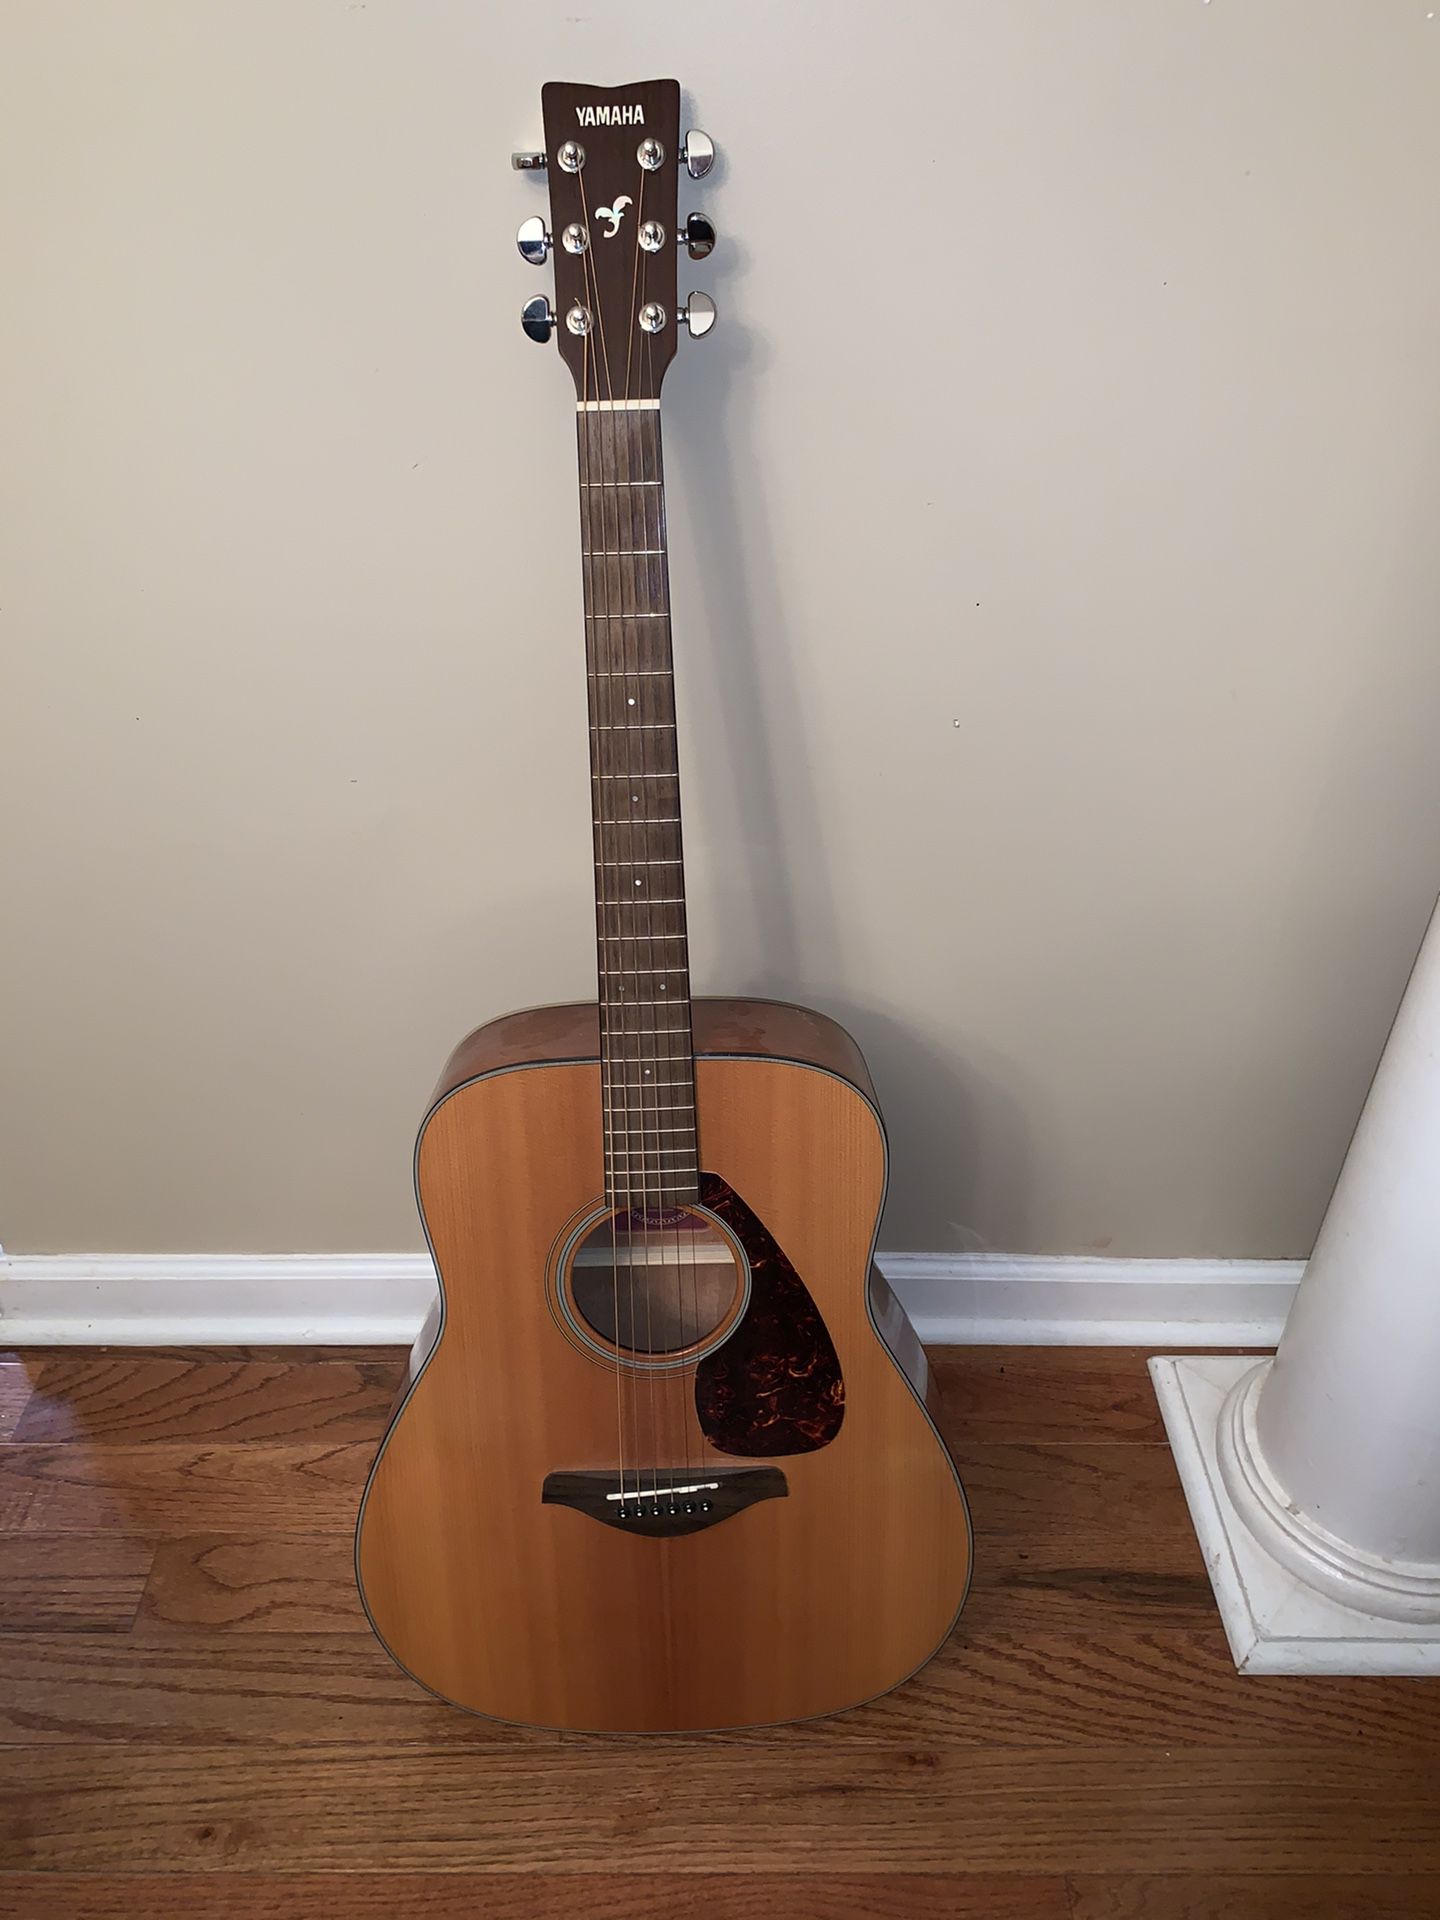 Yamaha acoustical guitar